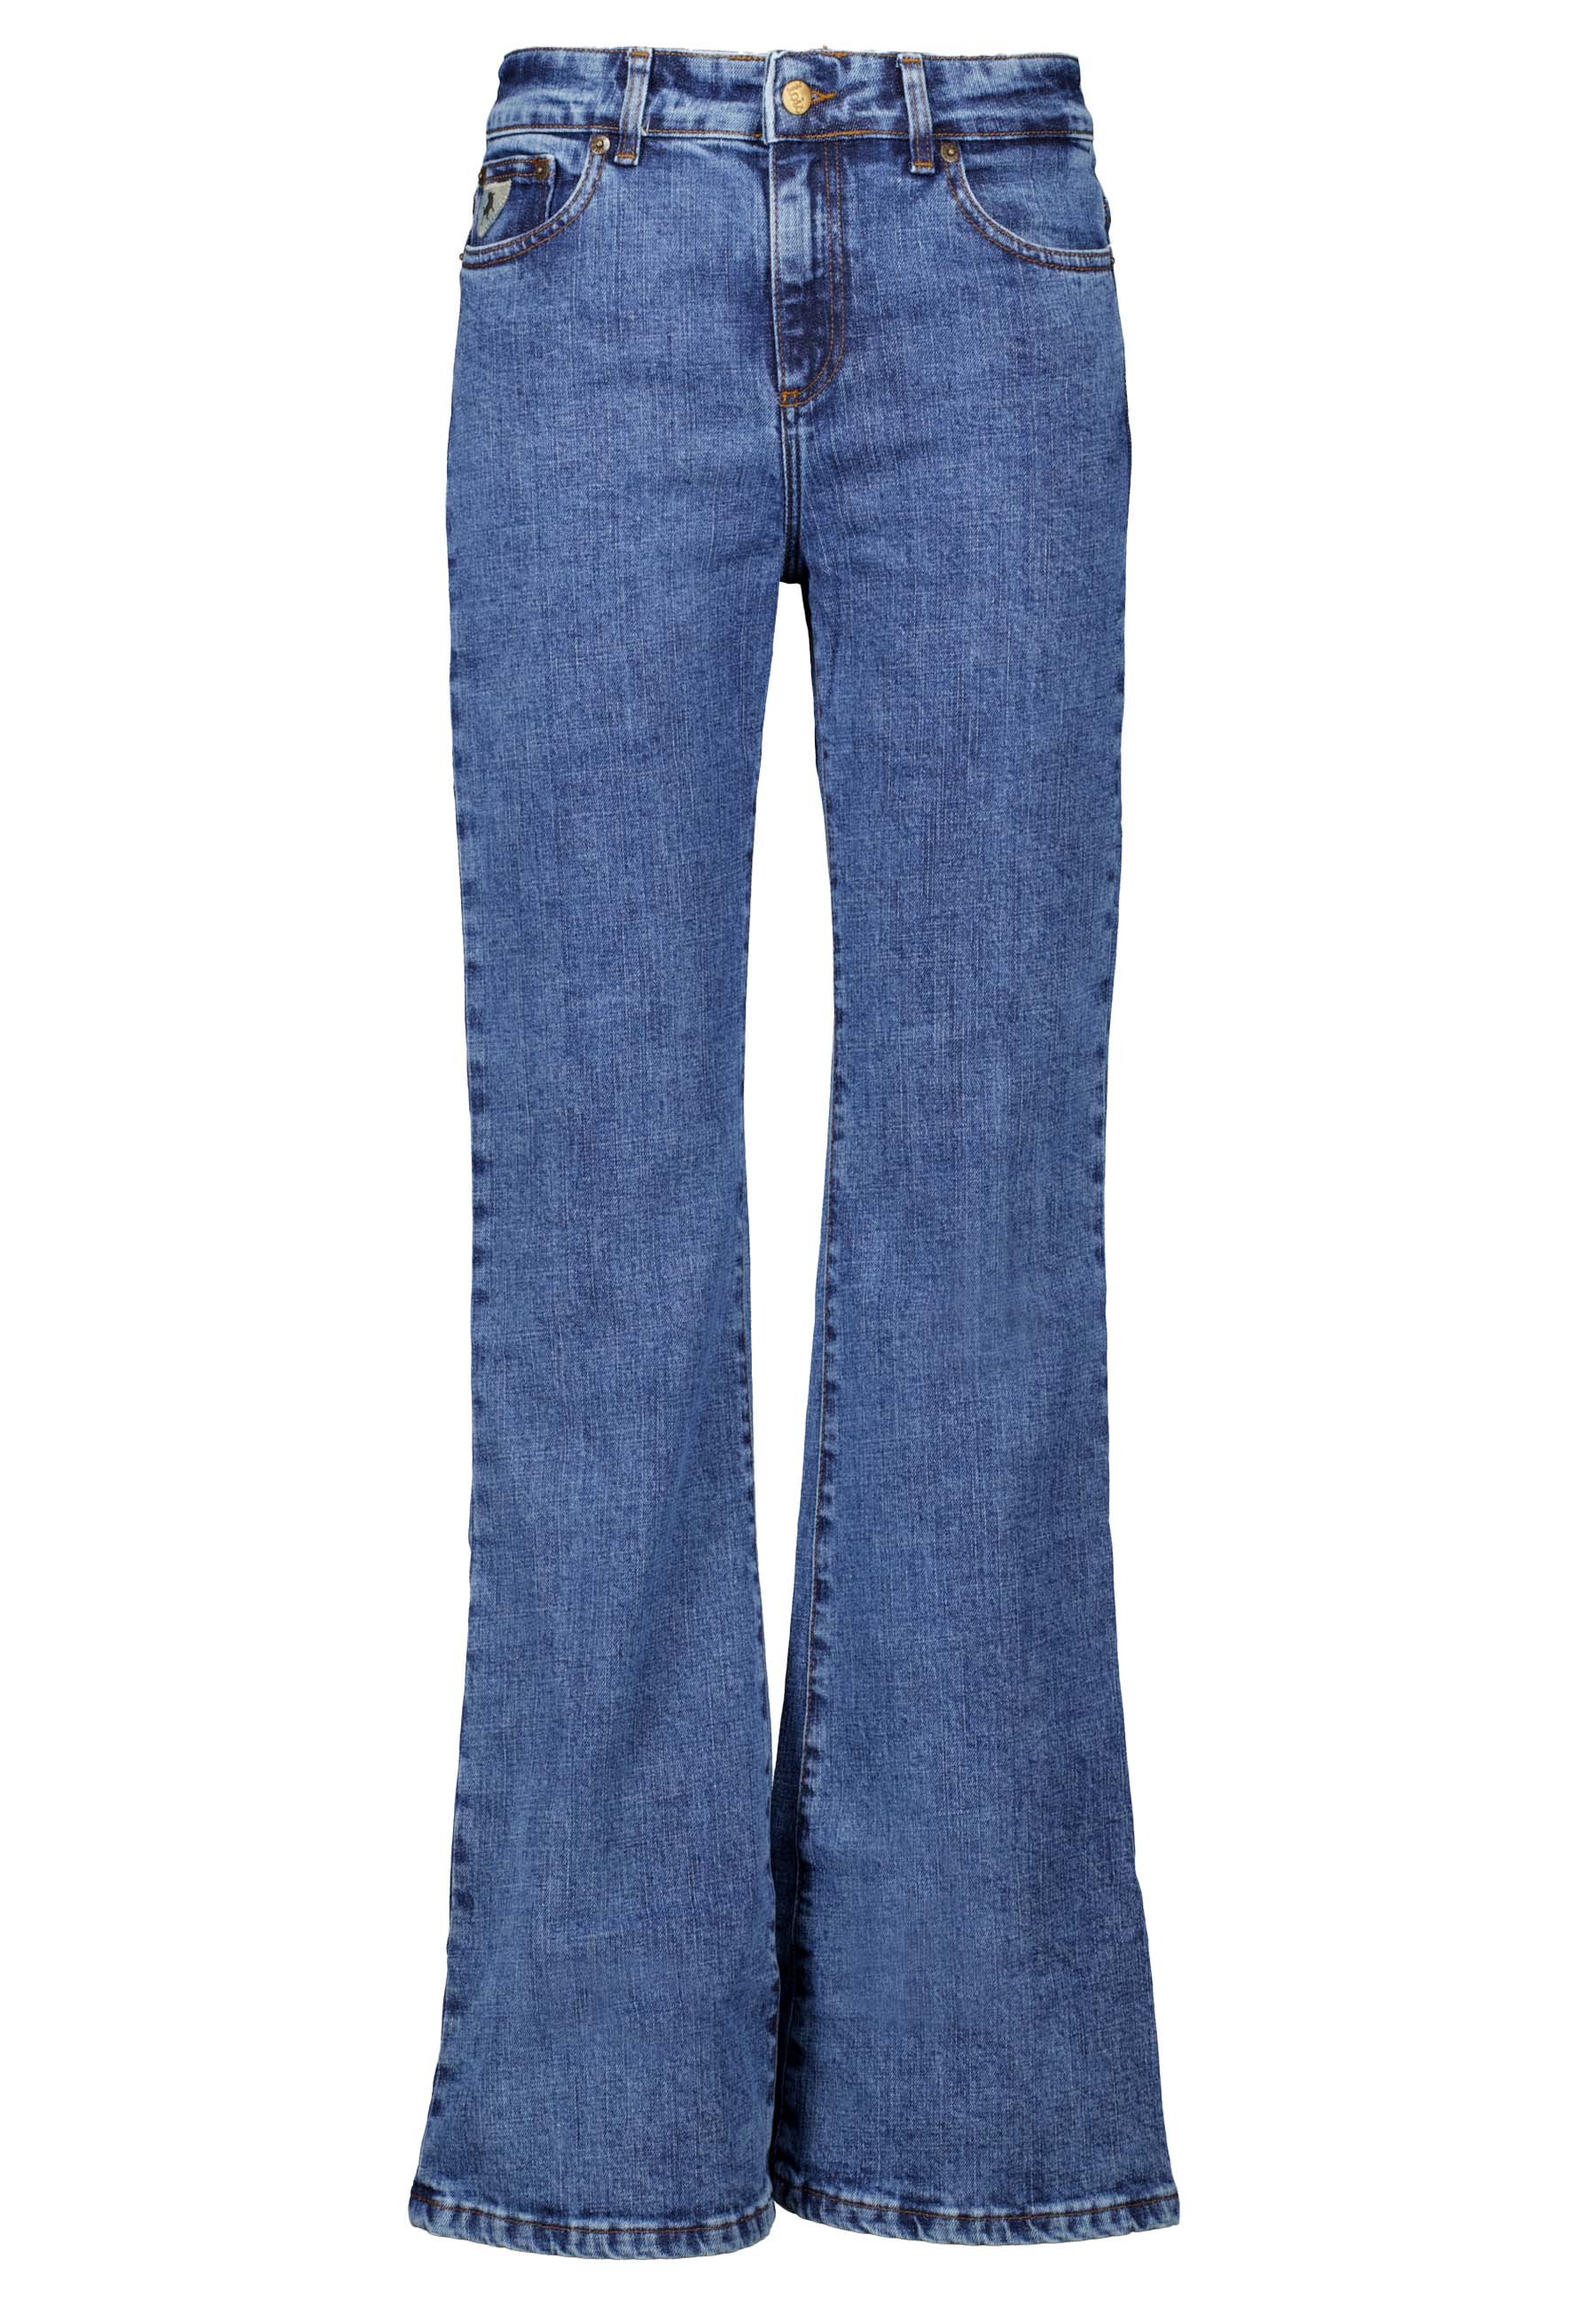 Lois Raval comfy jeans blauw Dames maat 29/34